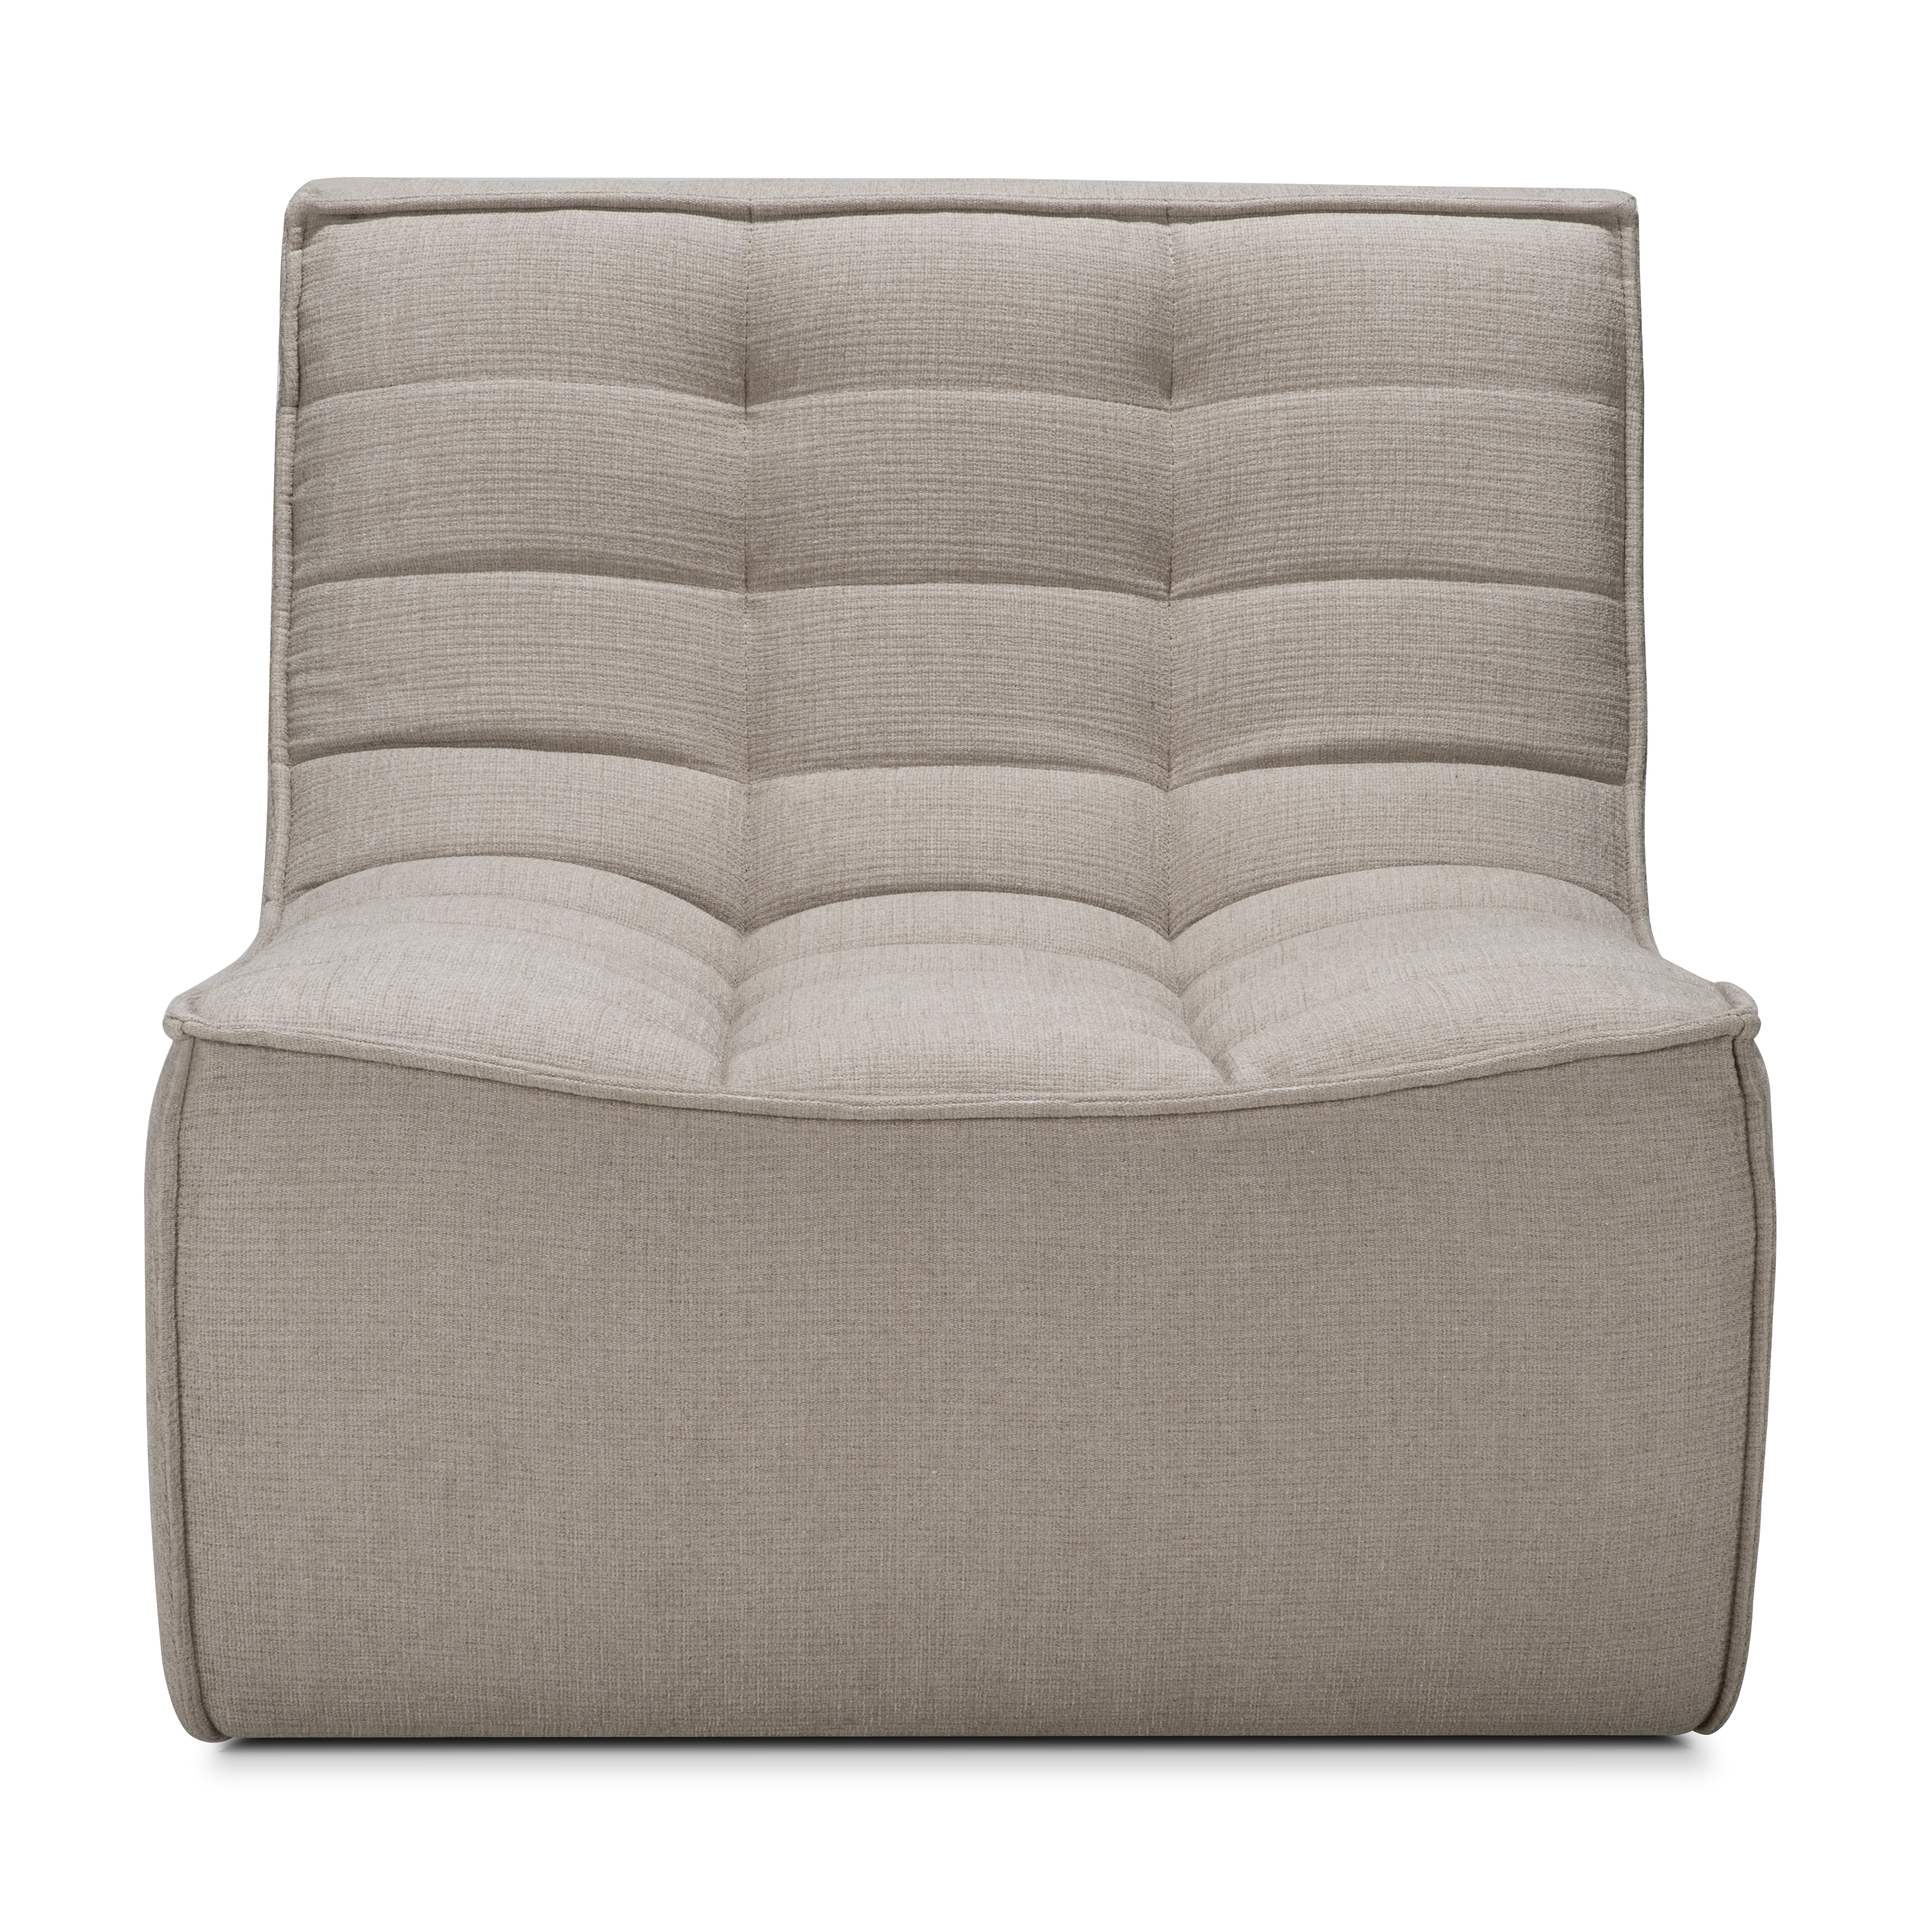 Sofa N701_1 seater_Ecru_Eco_Fabric_Ethnicraft